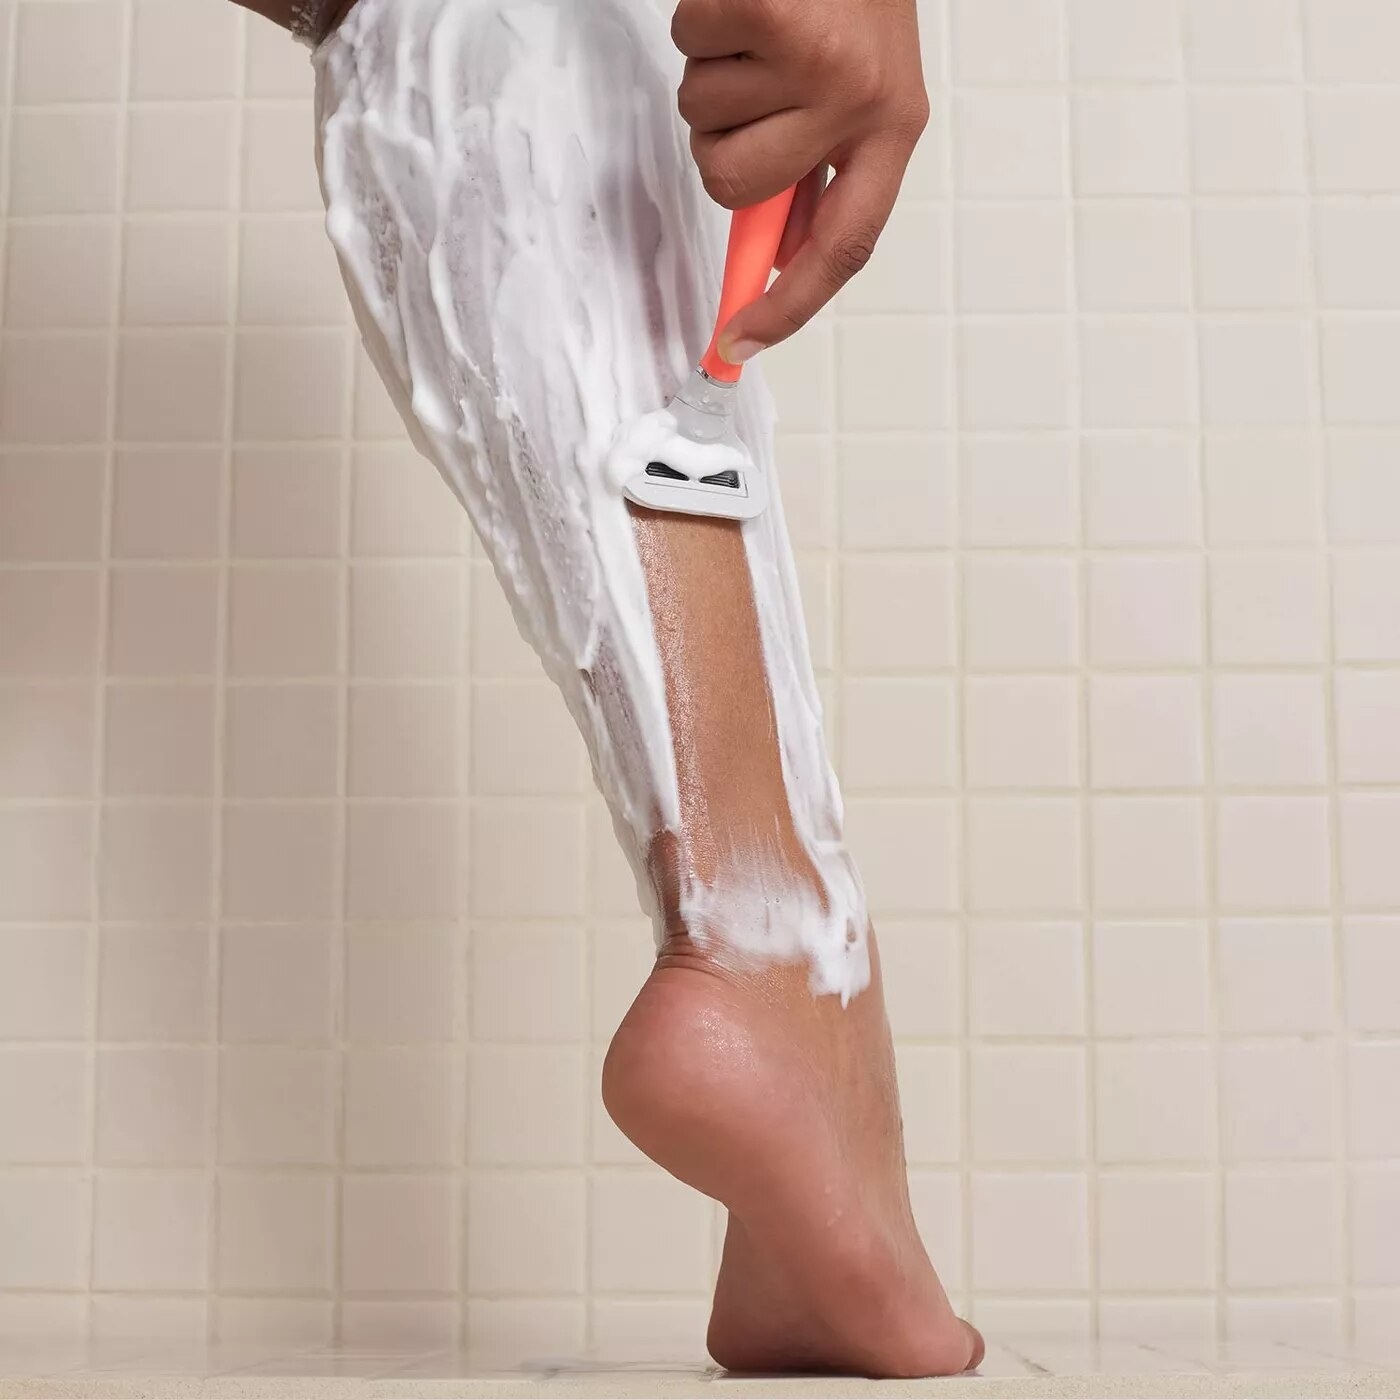 person shaving legs with flamingo razor